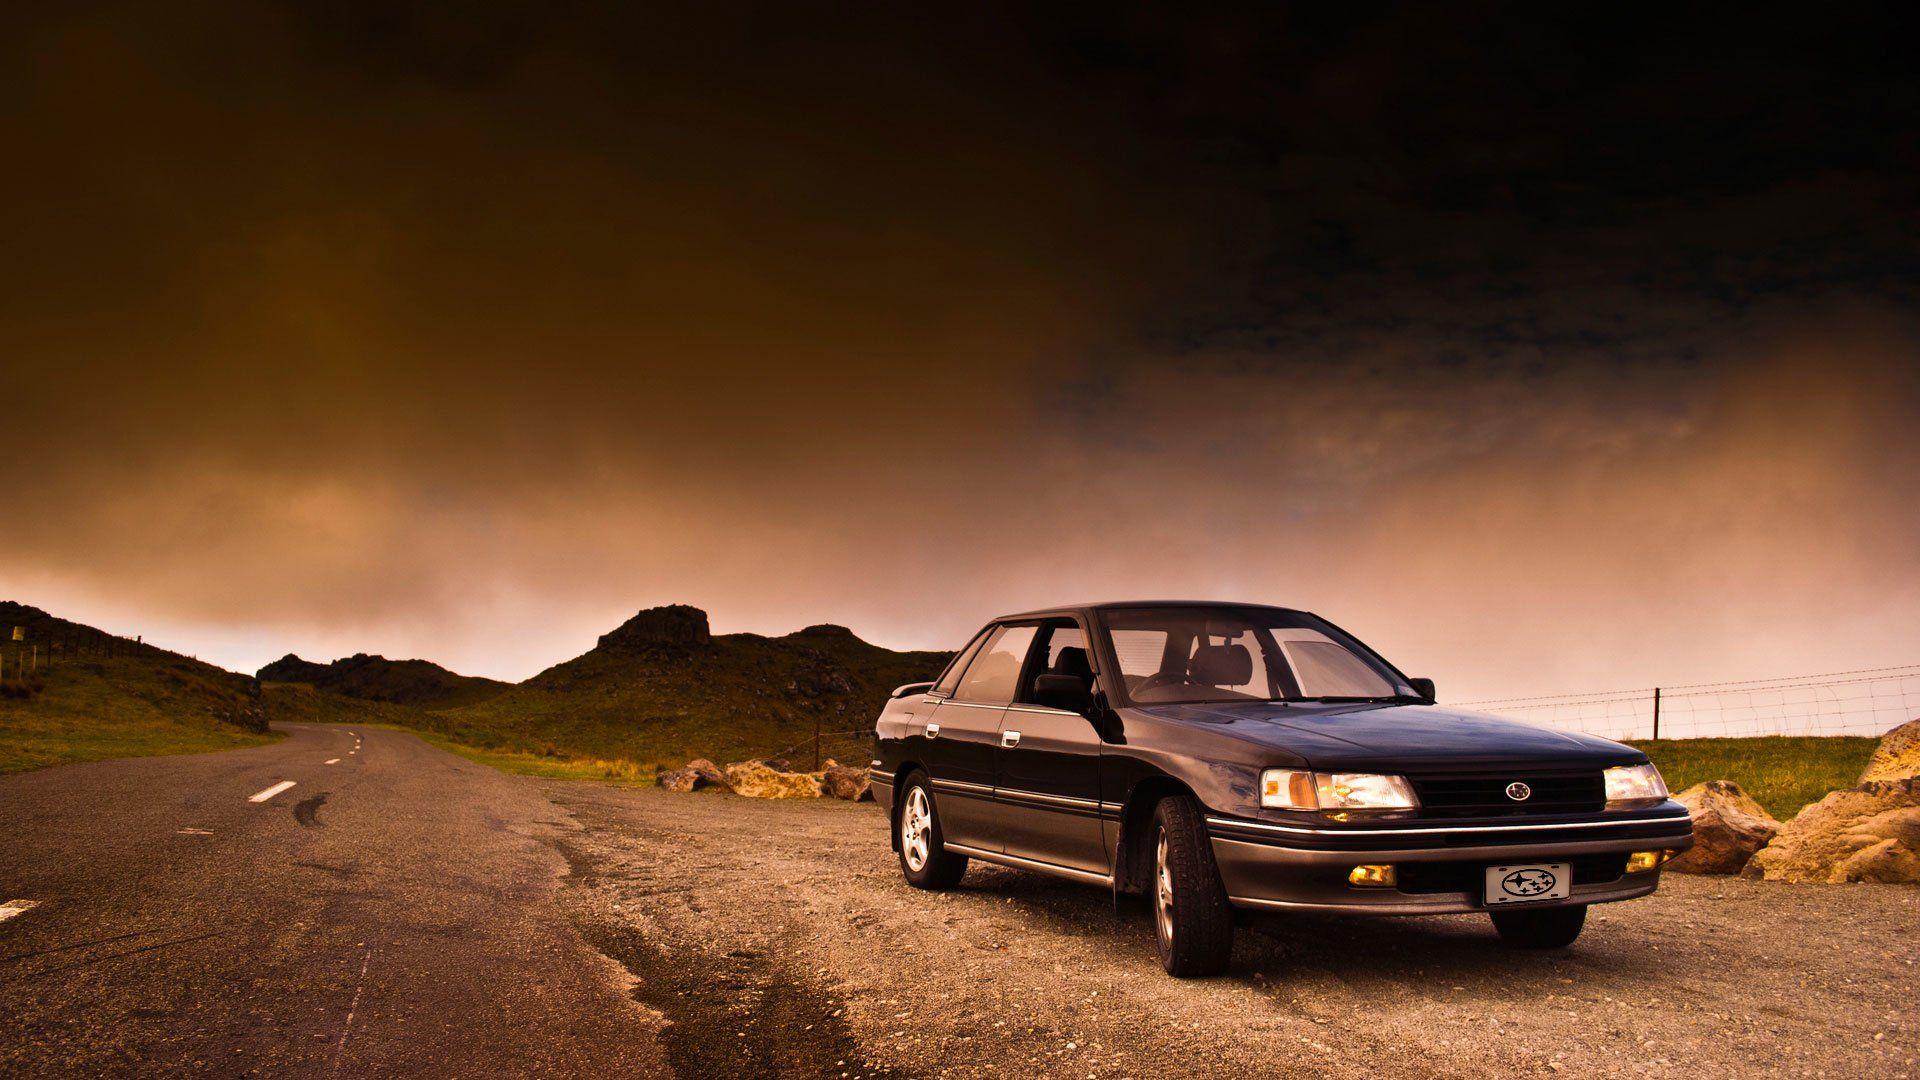 Subaru Legacy HD Wallpaper and Background Image